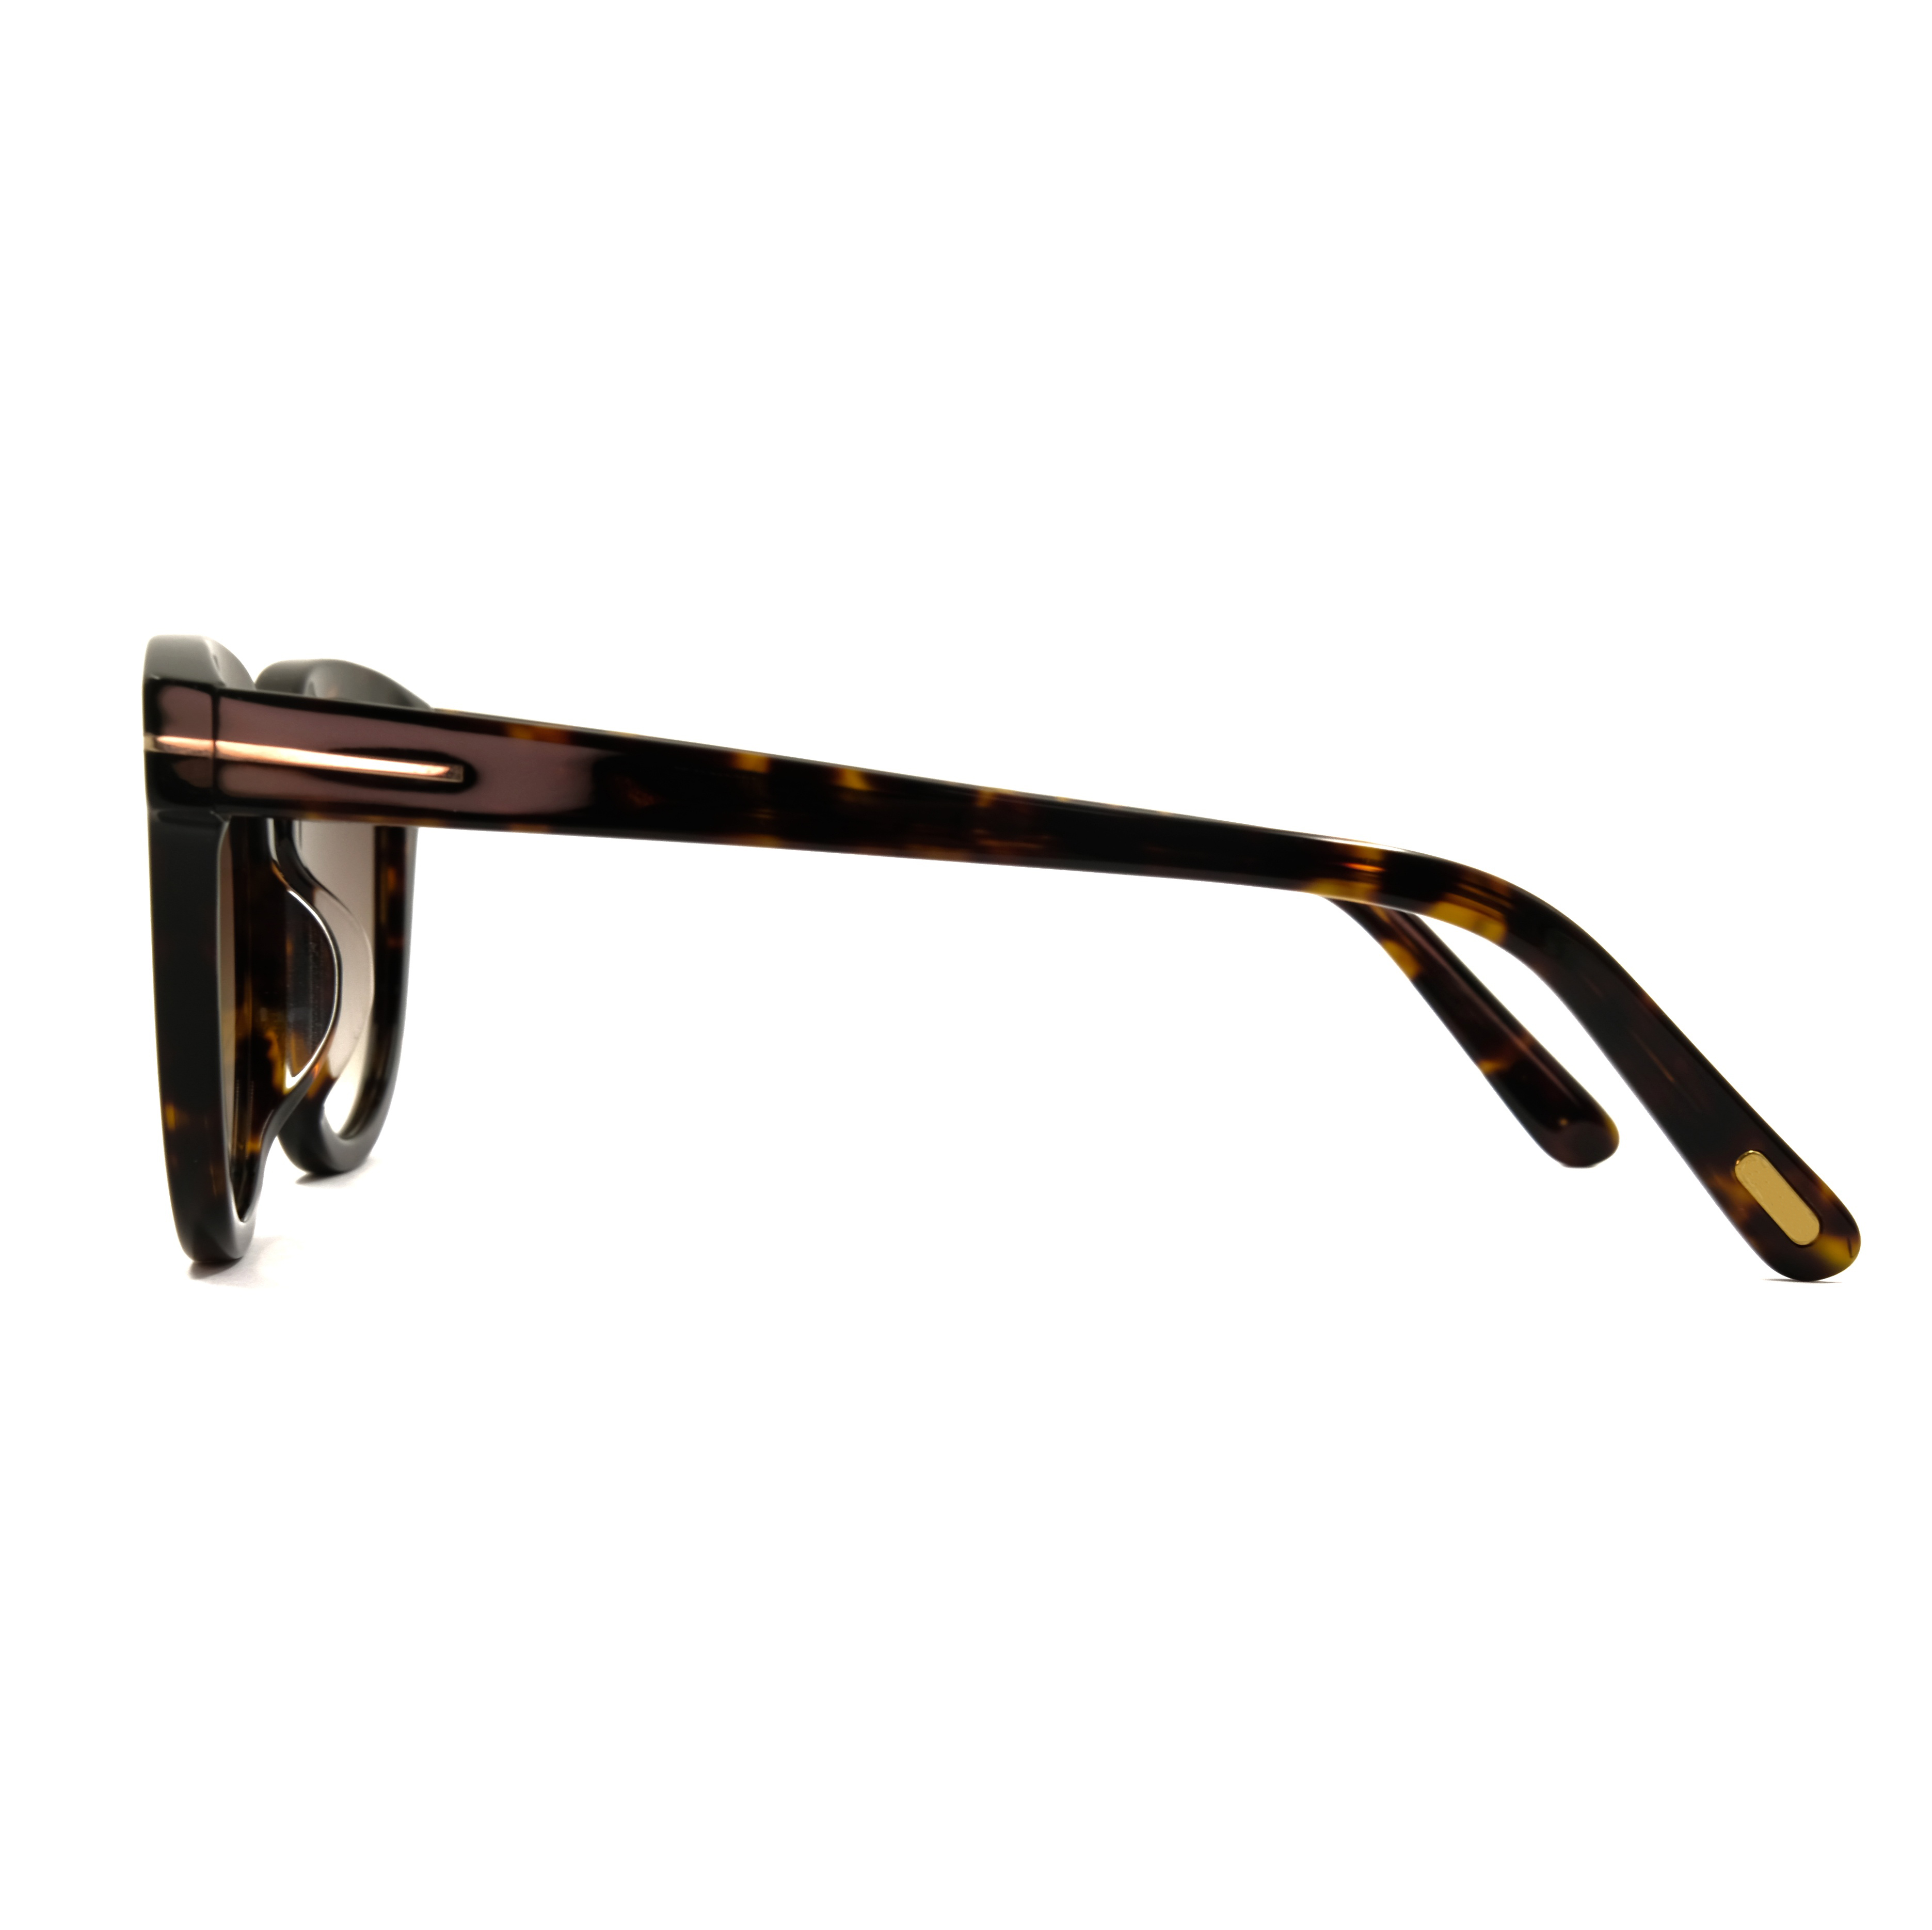 Classical Sunglasses Manufacturer Gradient Brown Polarized Lenses Demi Tortoise Acetate Frames